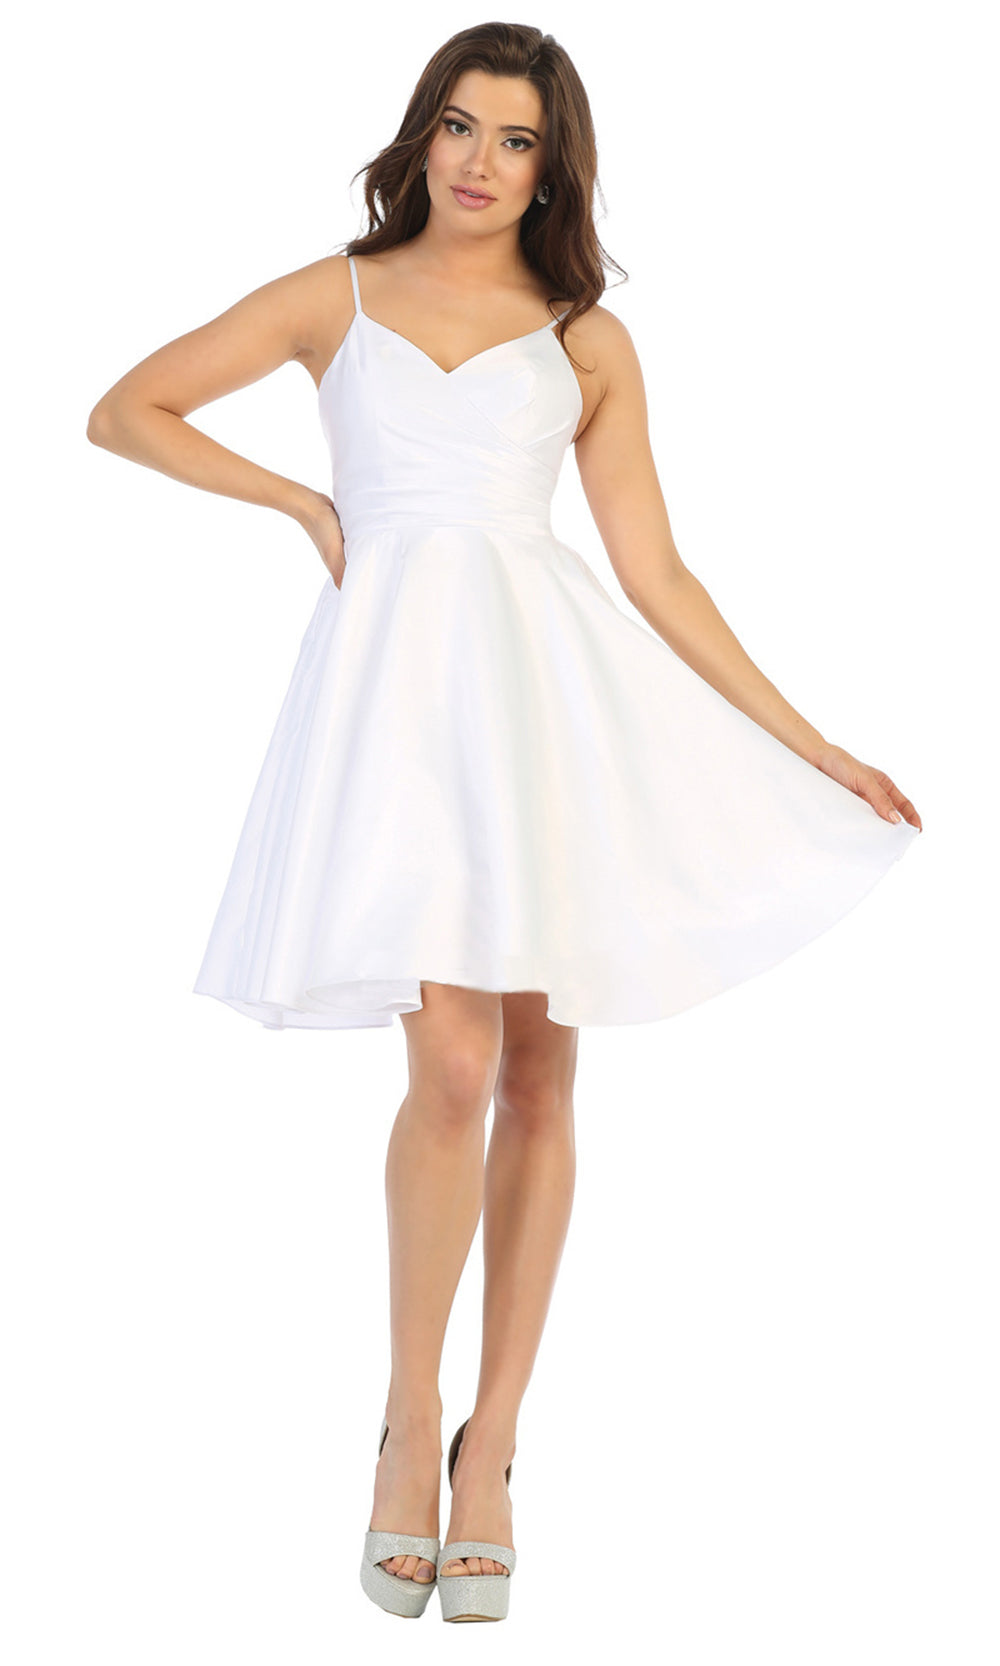 Sweet Jenny I Dress In Whitegrade 8 grad dresses, graduation dresses